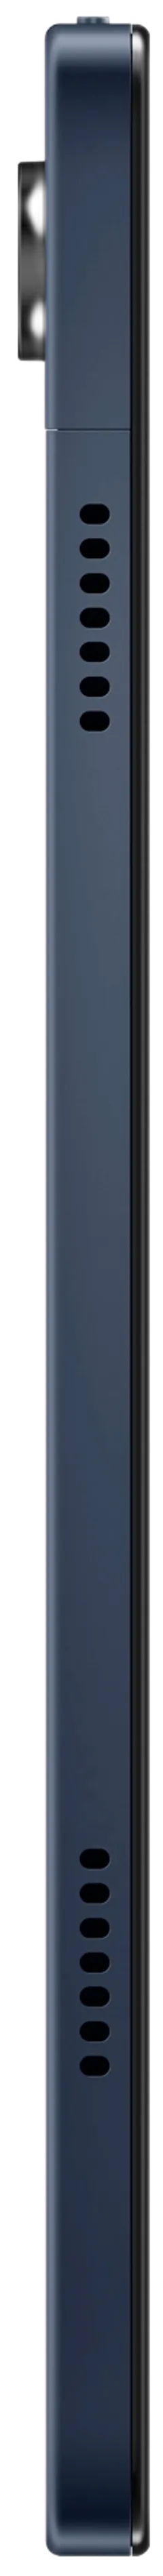 Samsung galaxy tab i9+ wifi laivastonsininen 64gb - 4